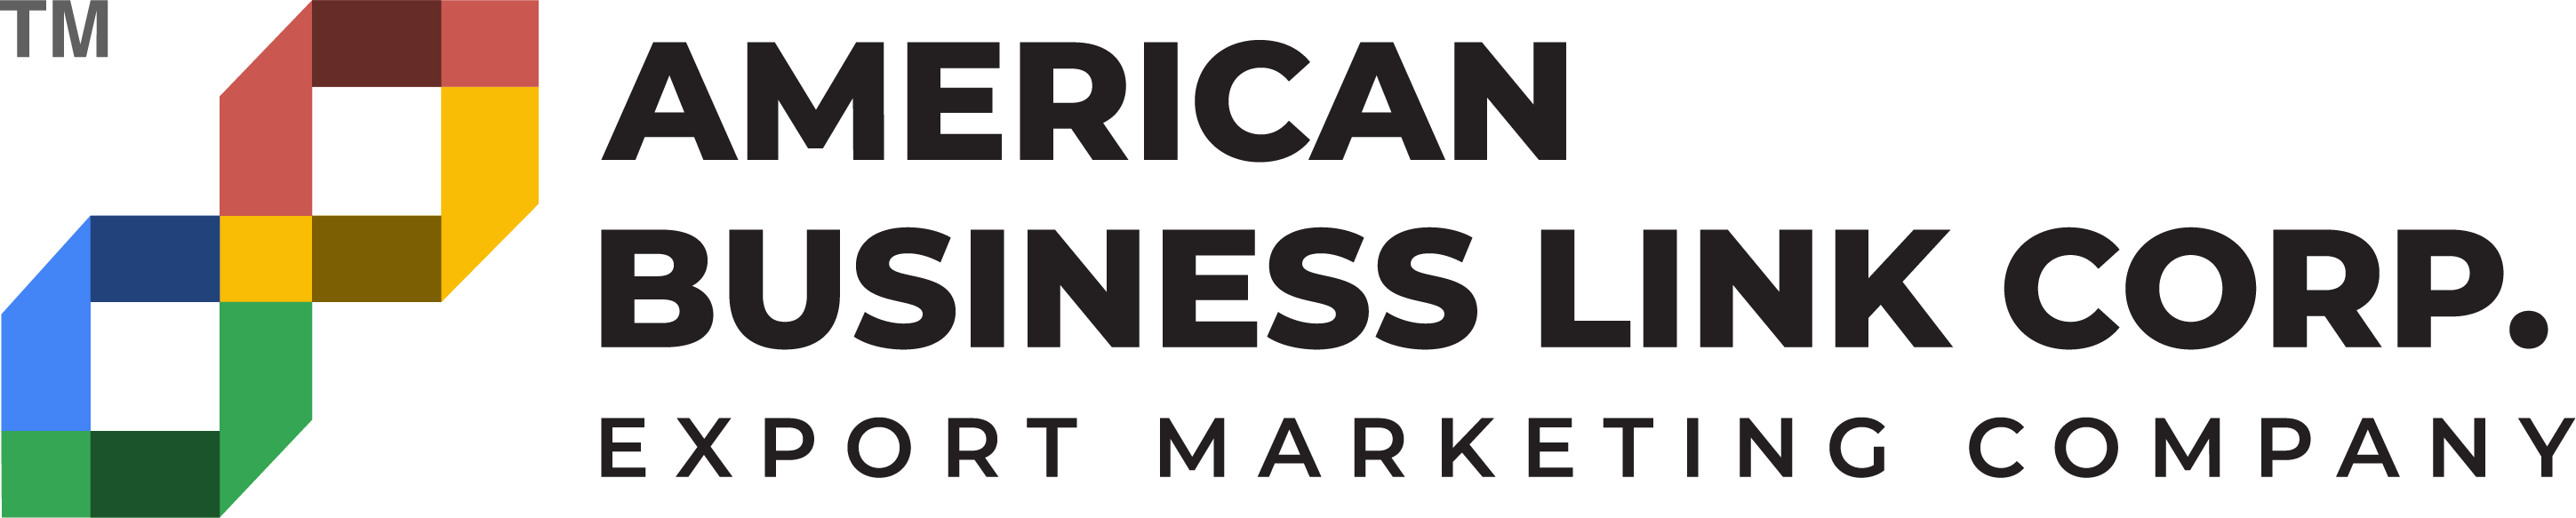 logo-full-color-american-business-link